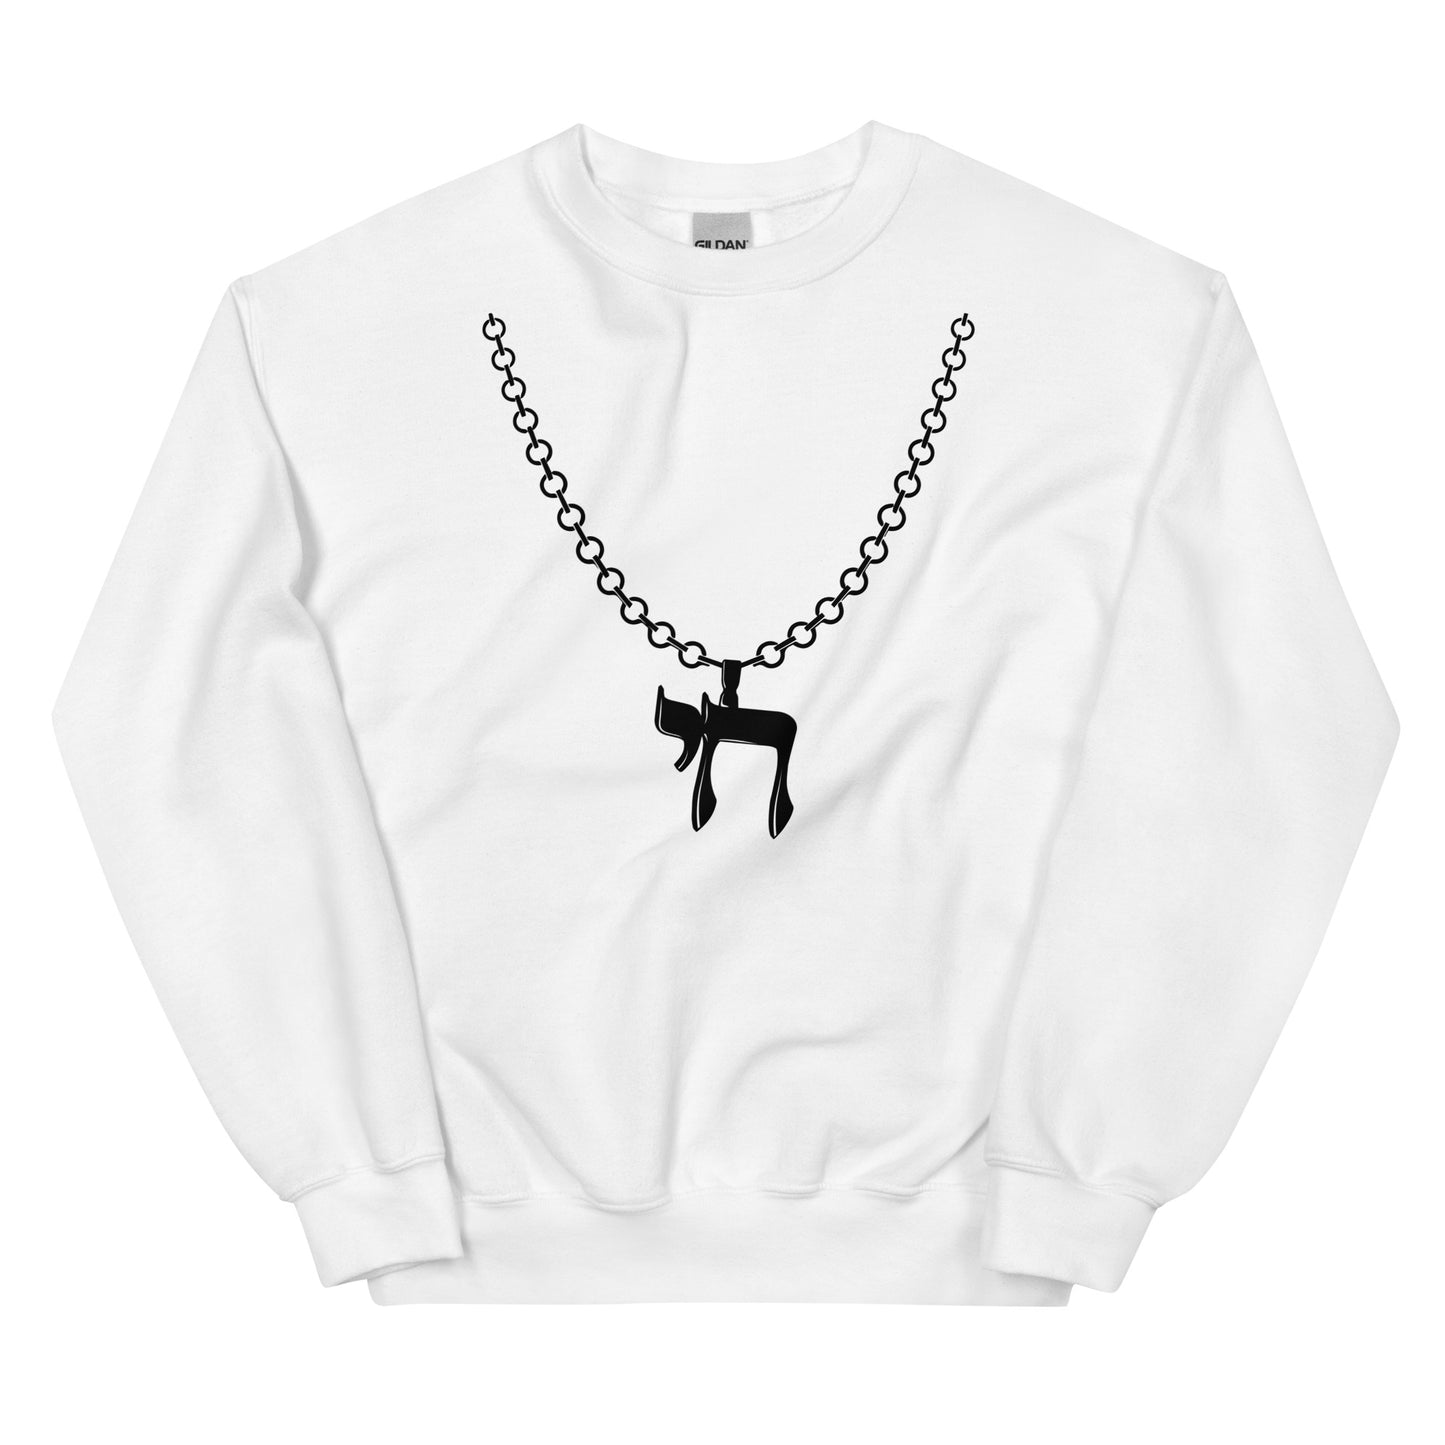 Chai chain - Unisex Sweatshirt